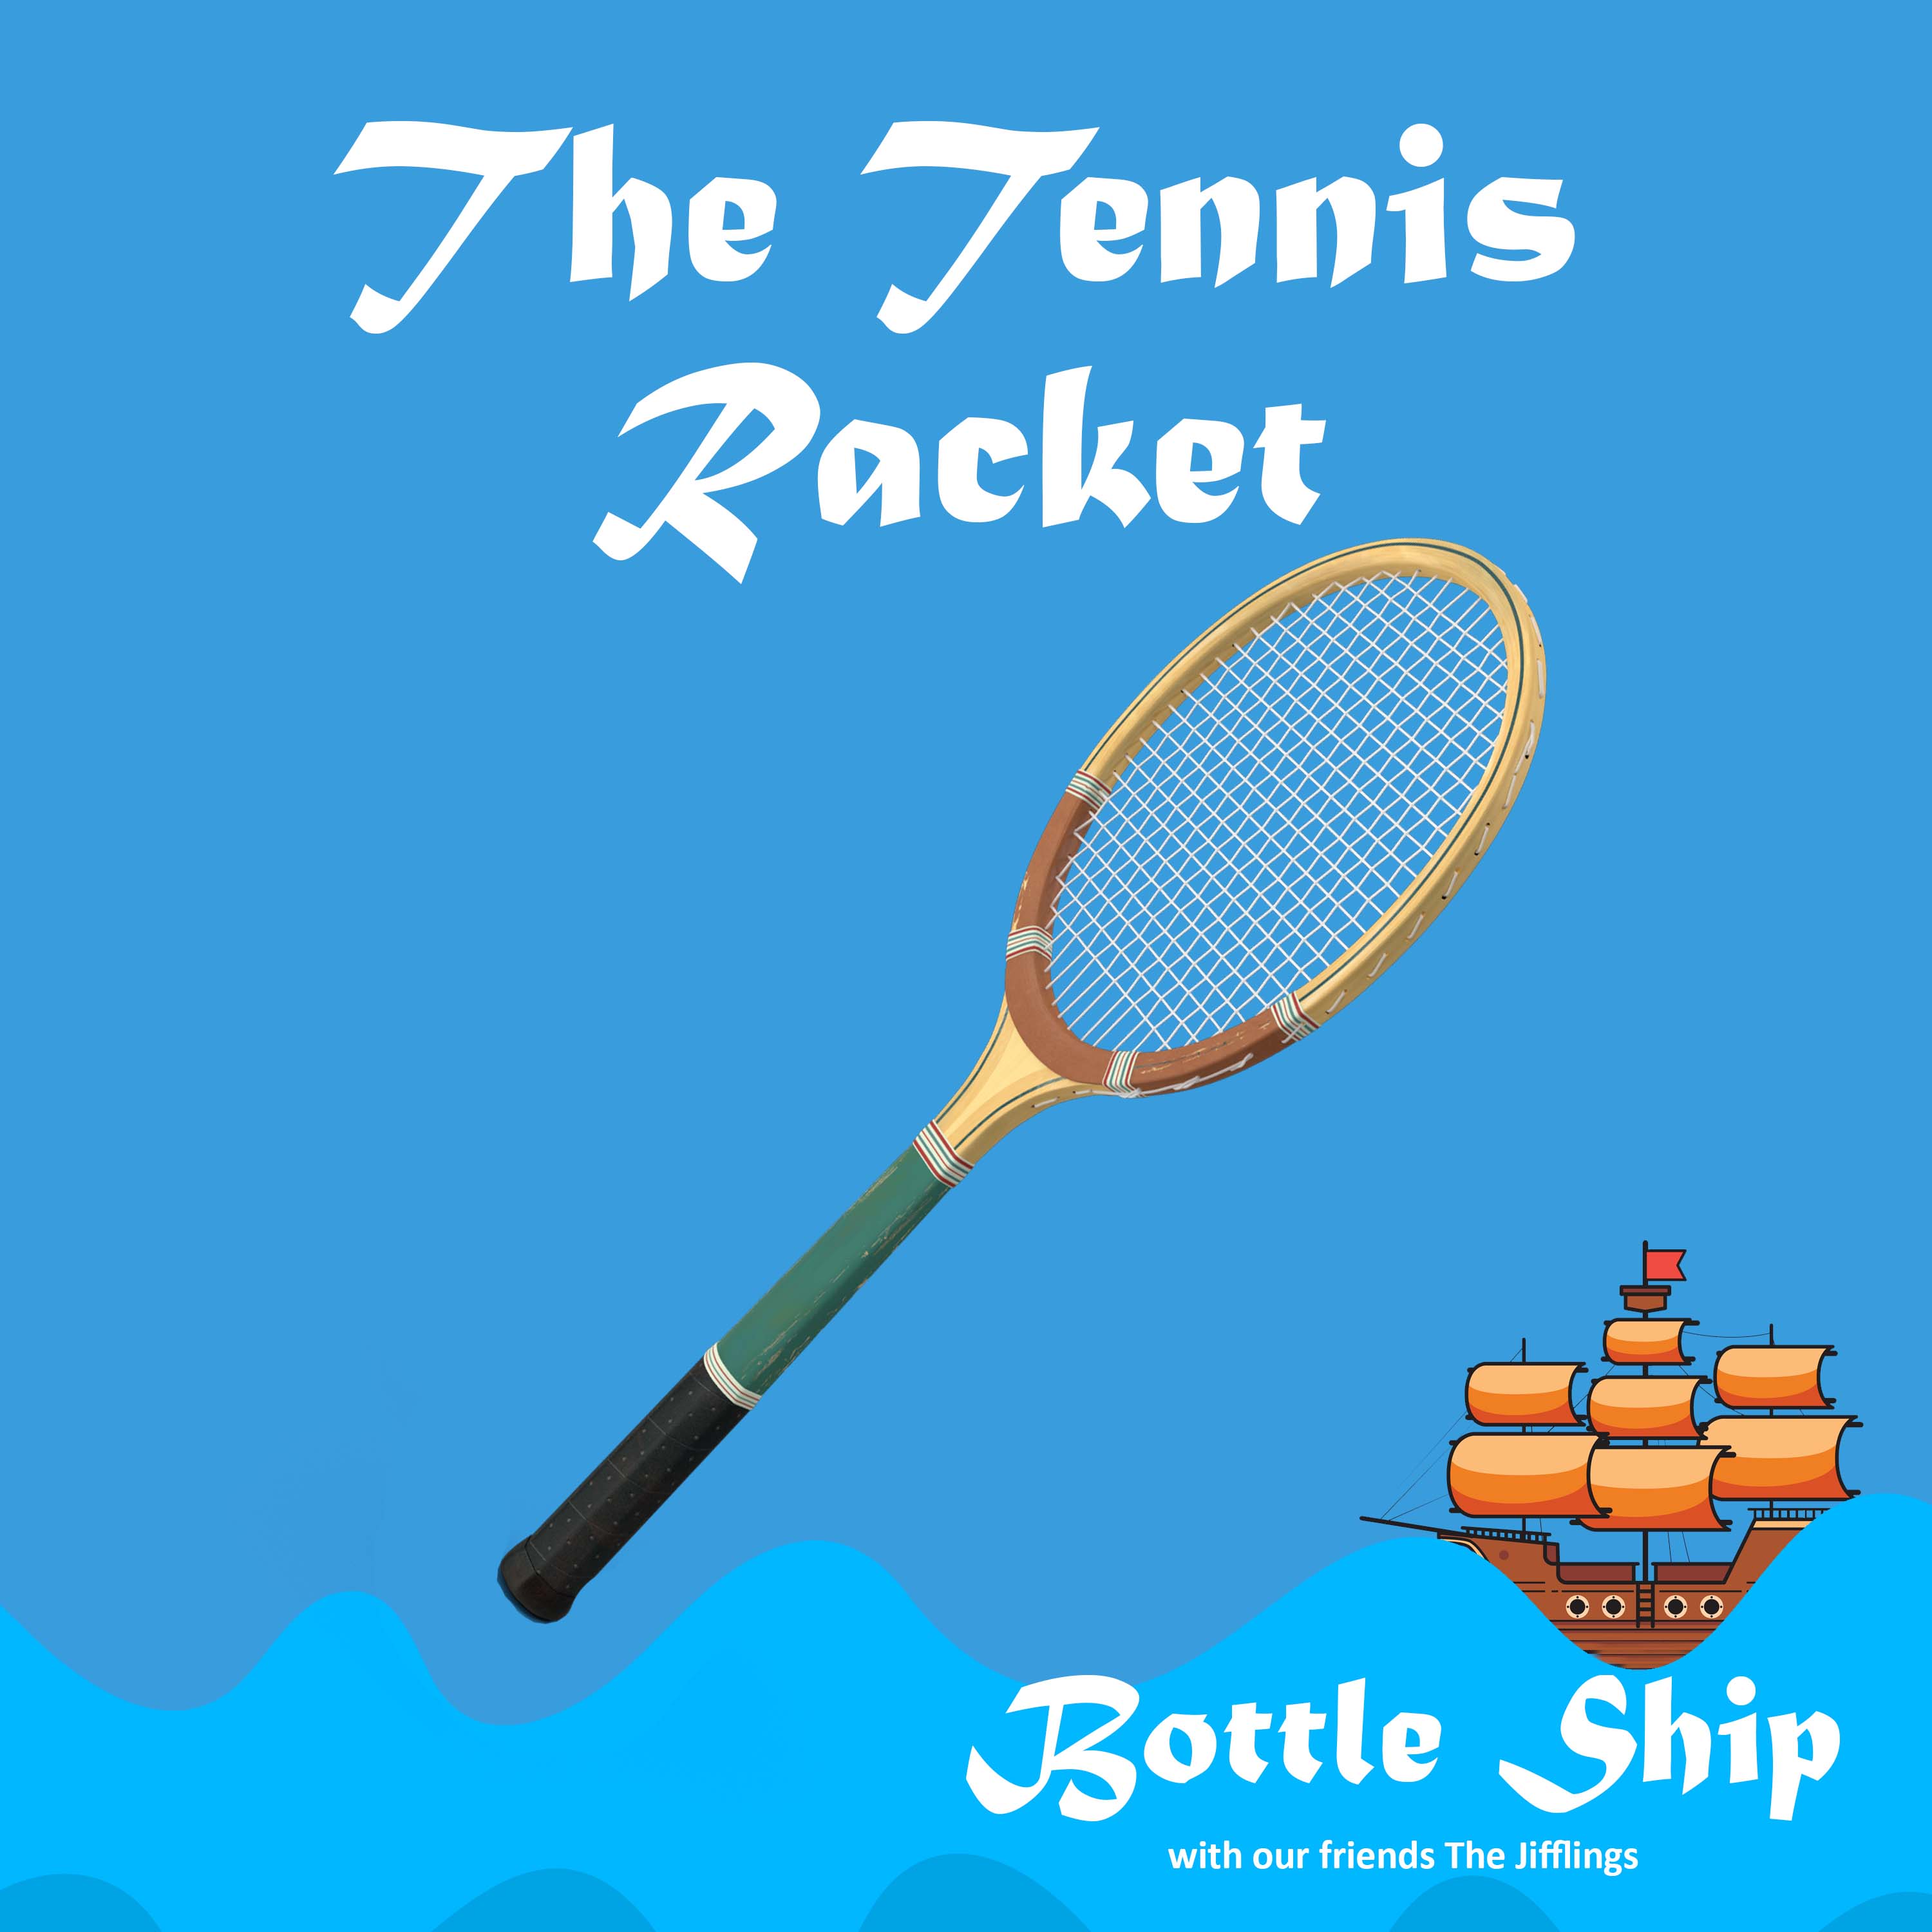 The Tennis Racket